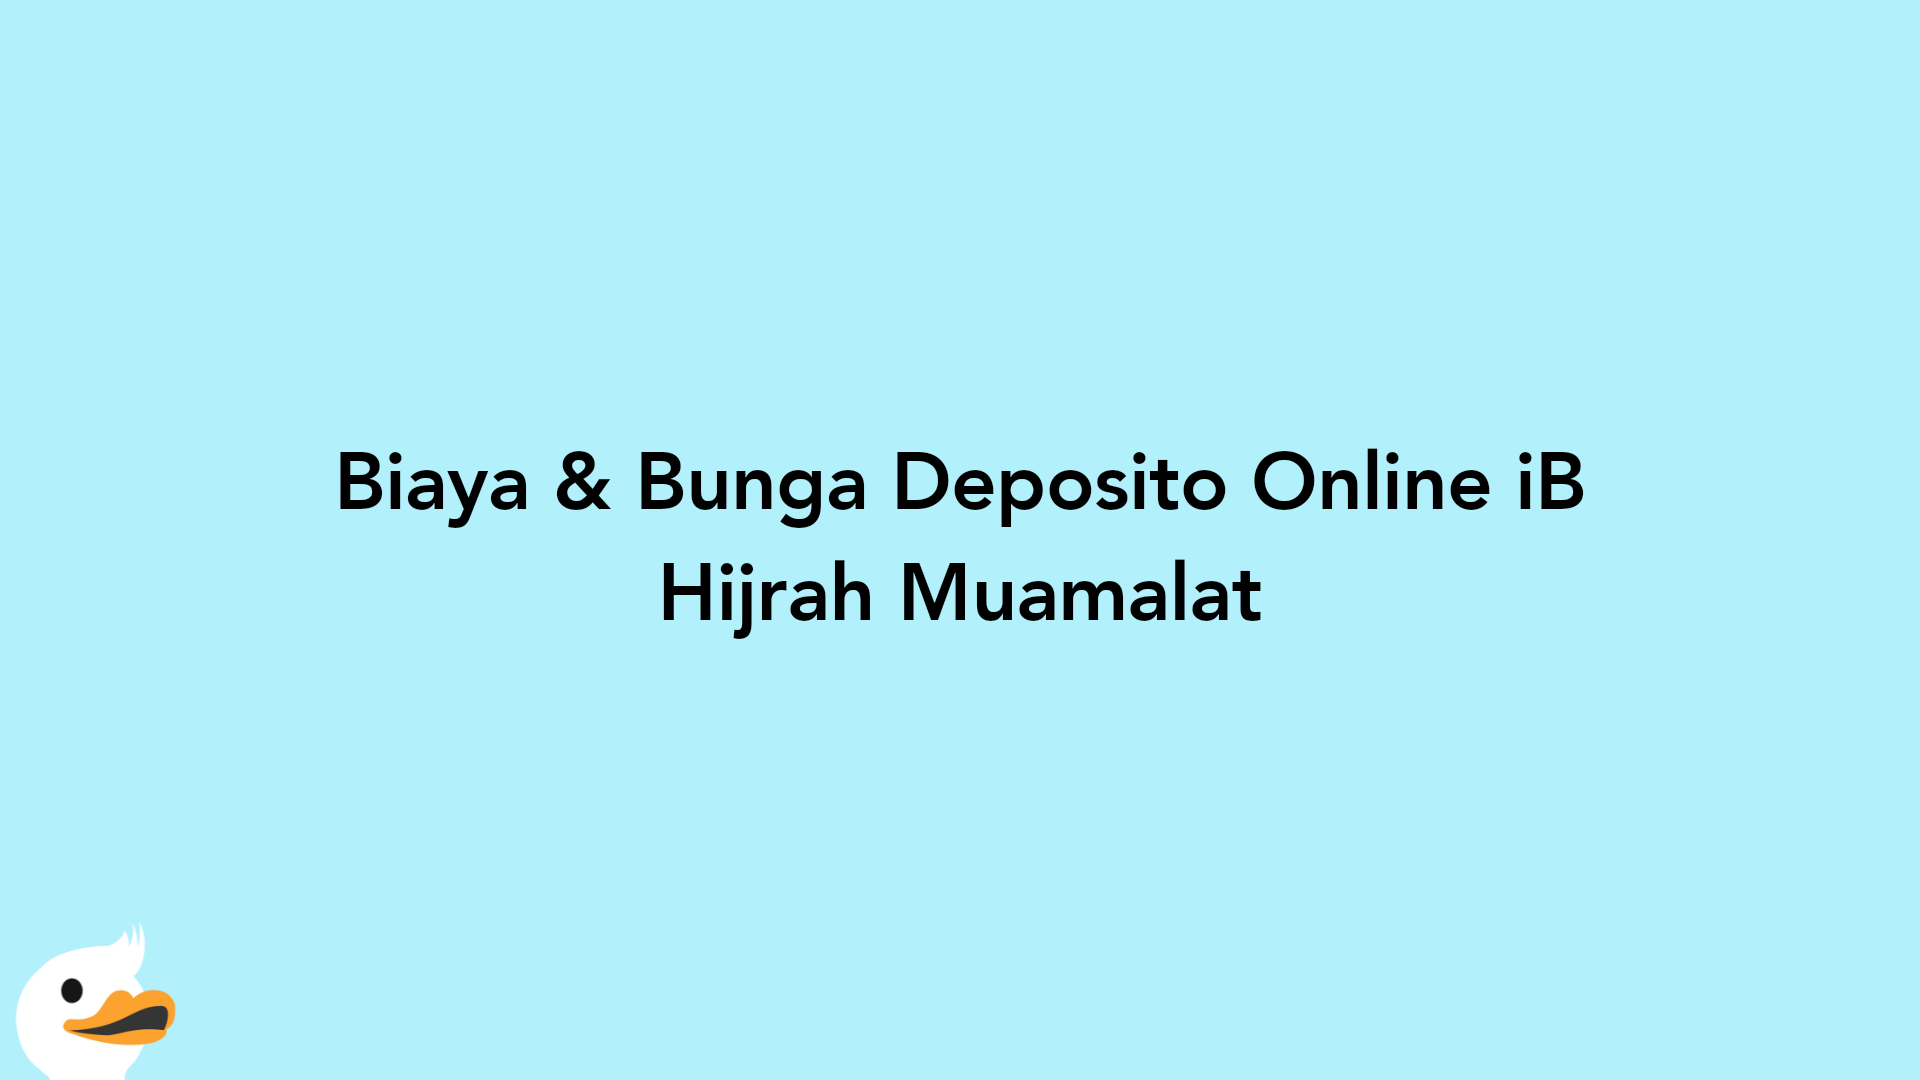 Biaya & Bunga Deposito Online iB Hijrah Muamalat